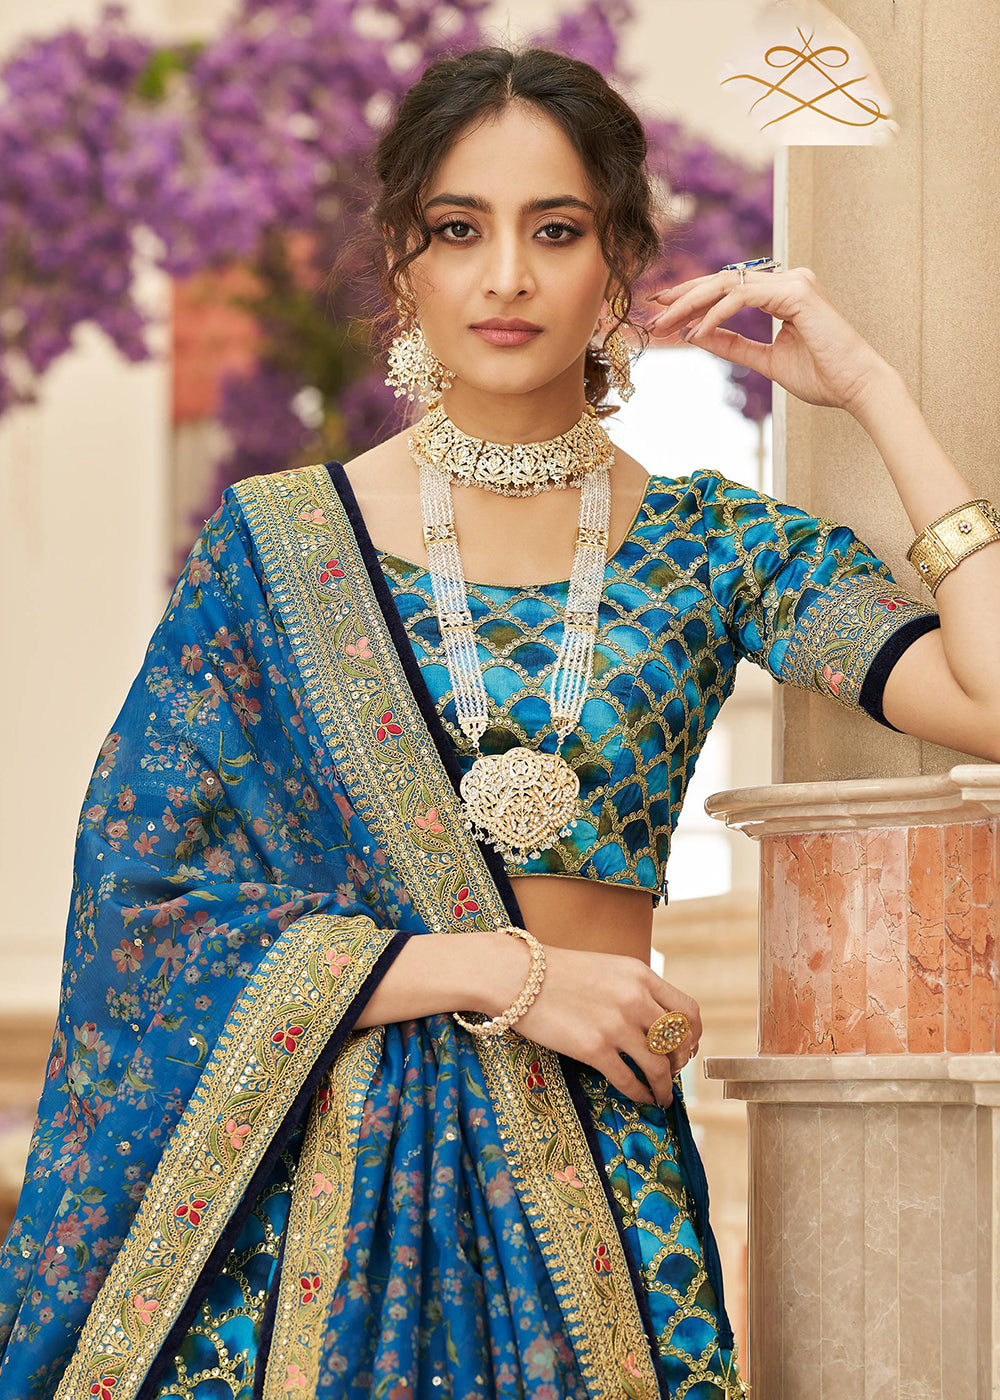 Buy Now Appealing Blue Art Silk Embroidery Wedding Lehenga Choli Online in USA, UK, Canada & Worldwide at Empress Clothing. 